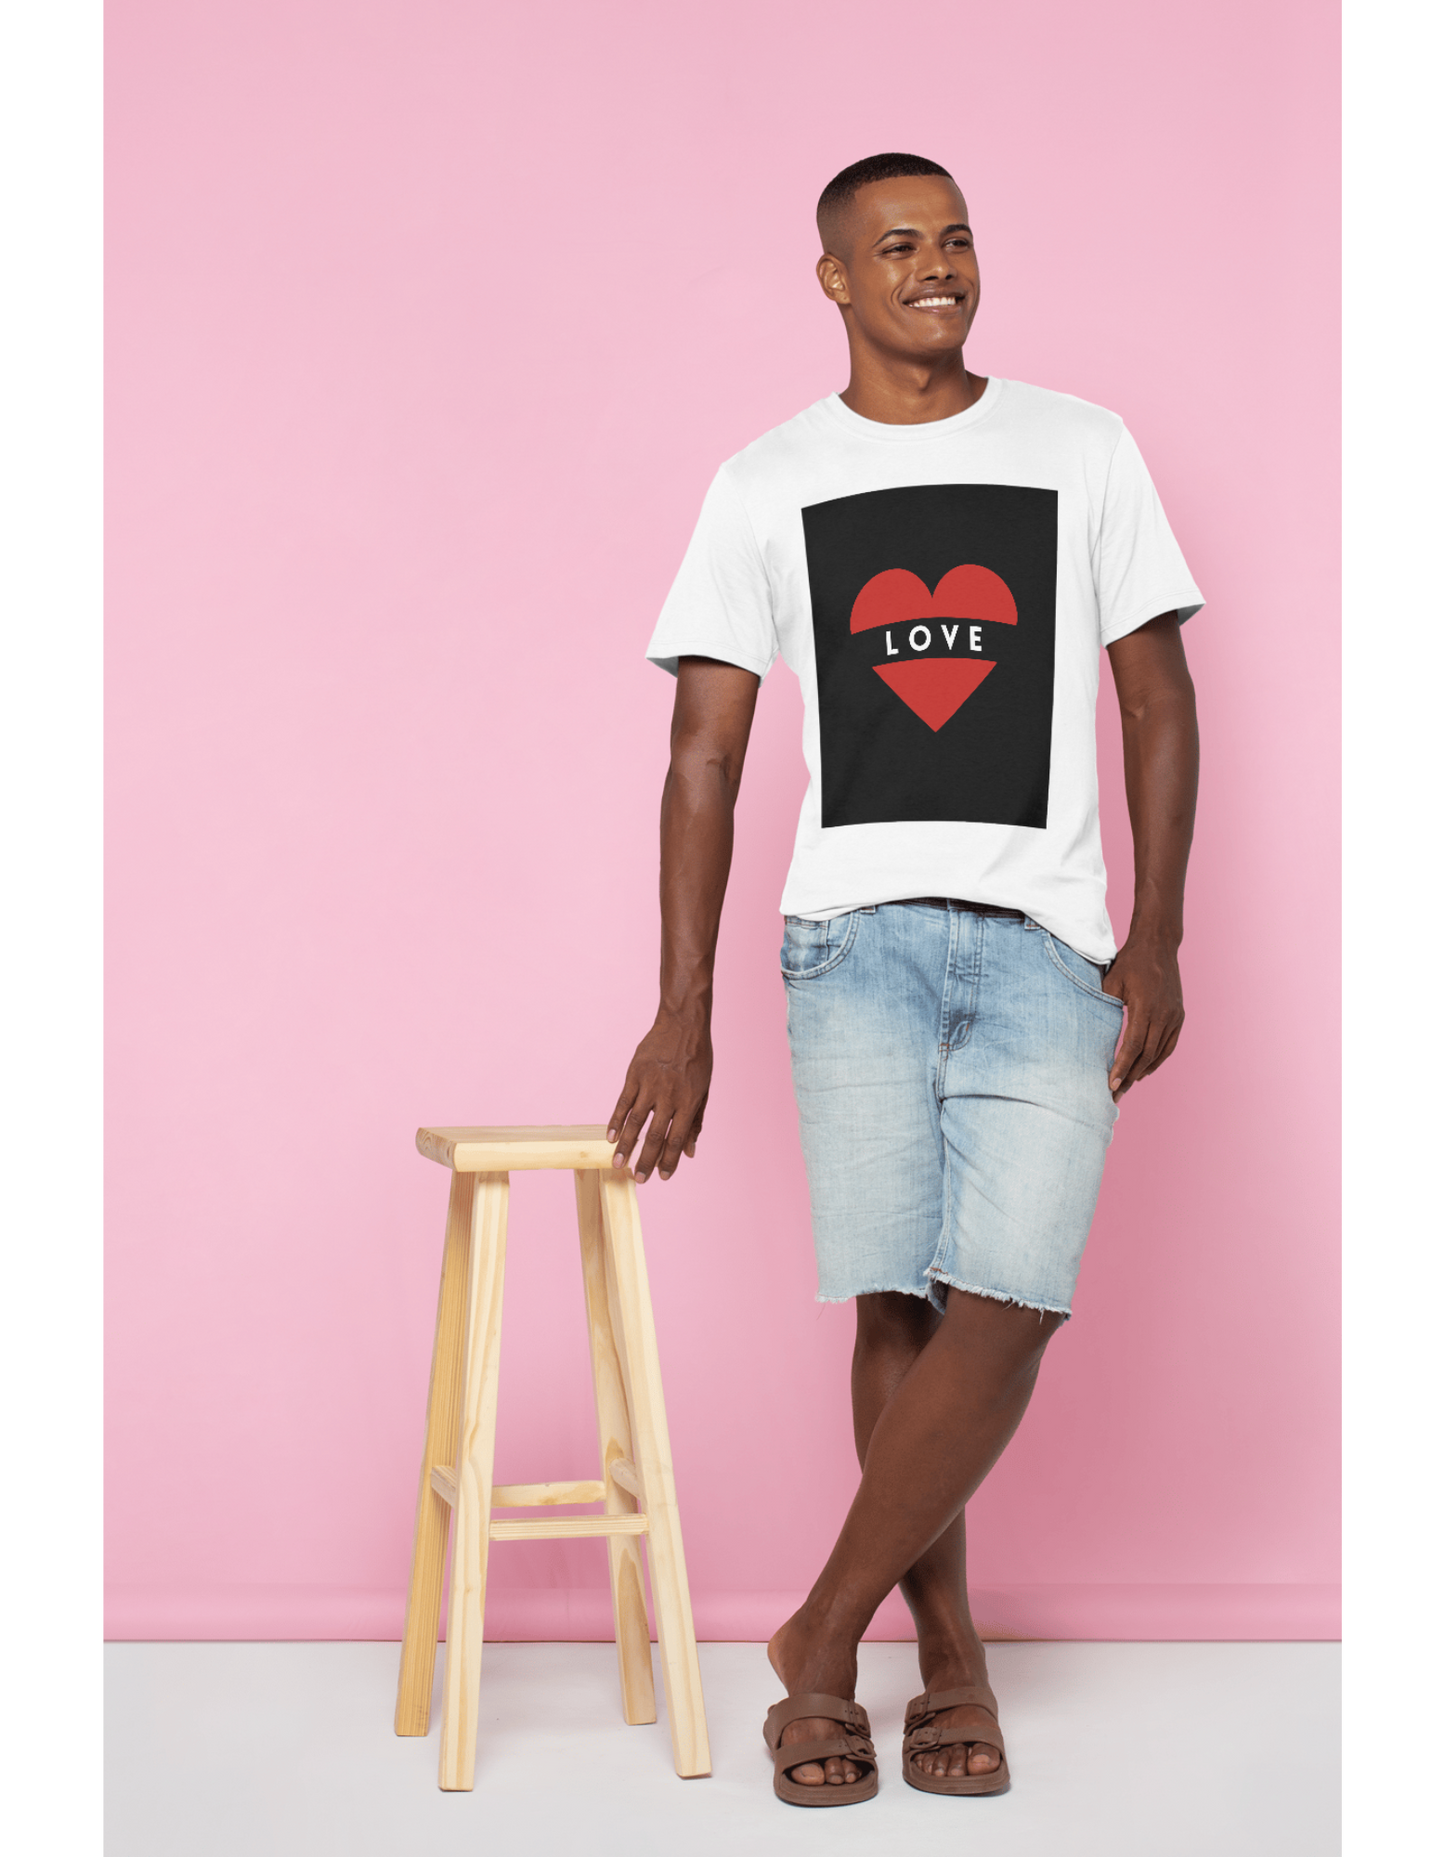 Trillingo Unisex Love Text Printed T-Shirt